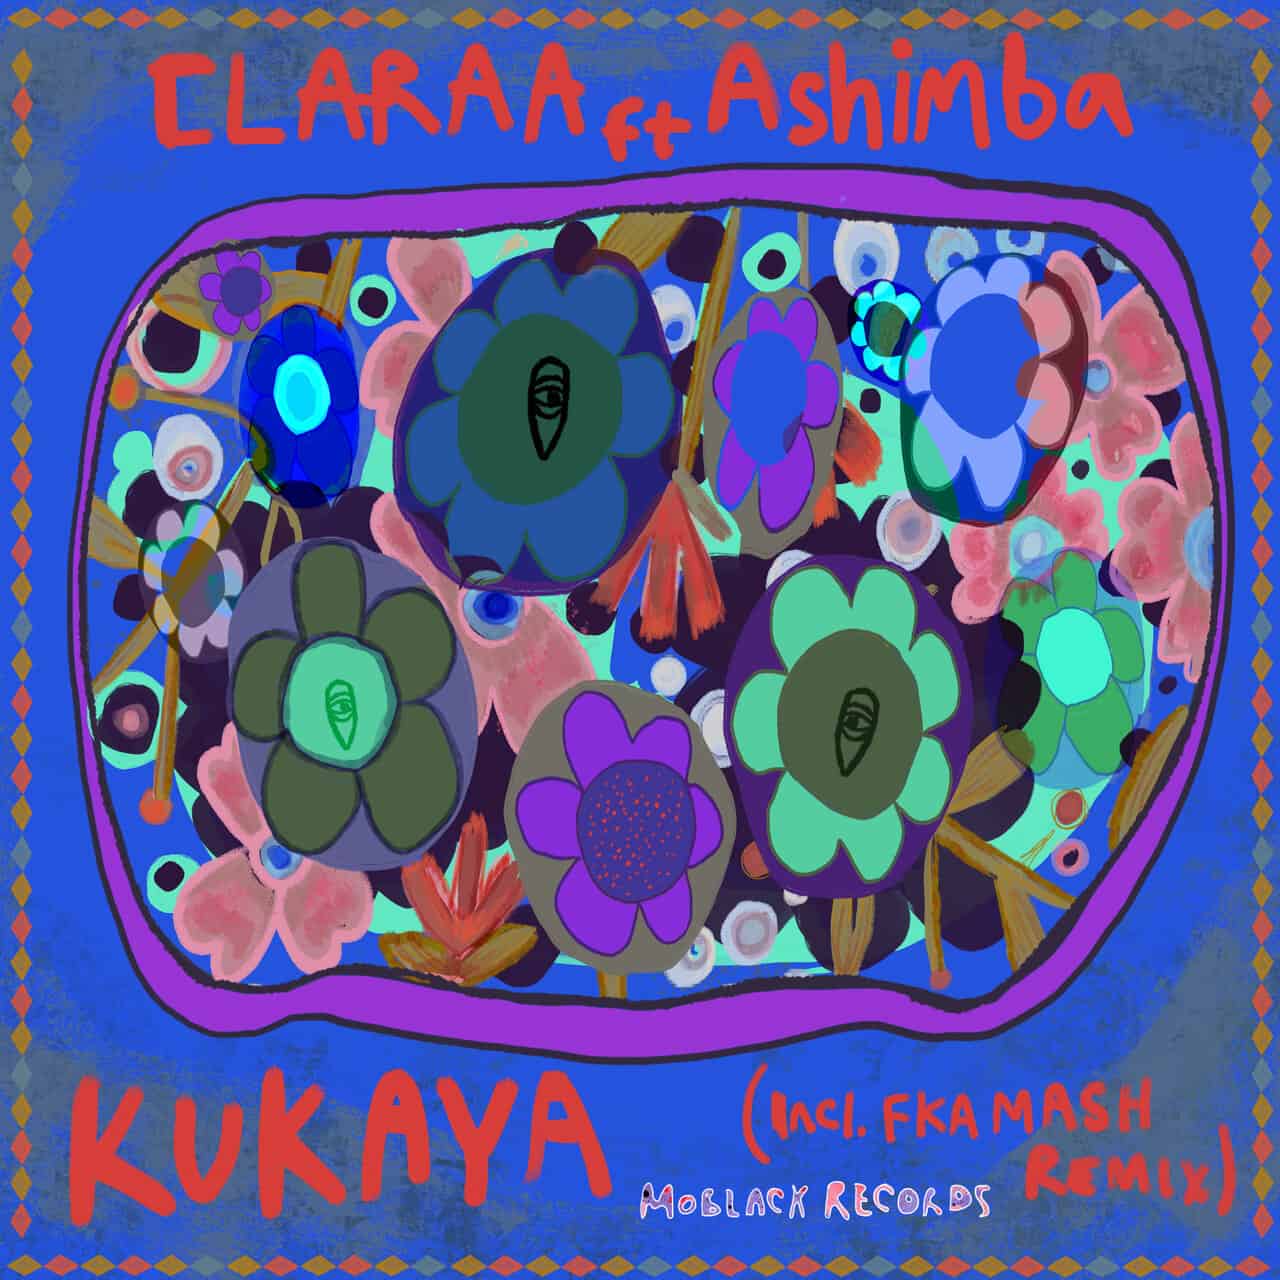 image cover: Claraa/Ashimba - Kukaya /